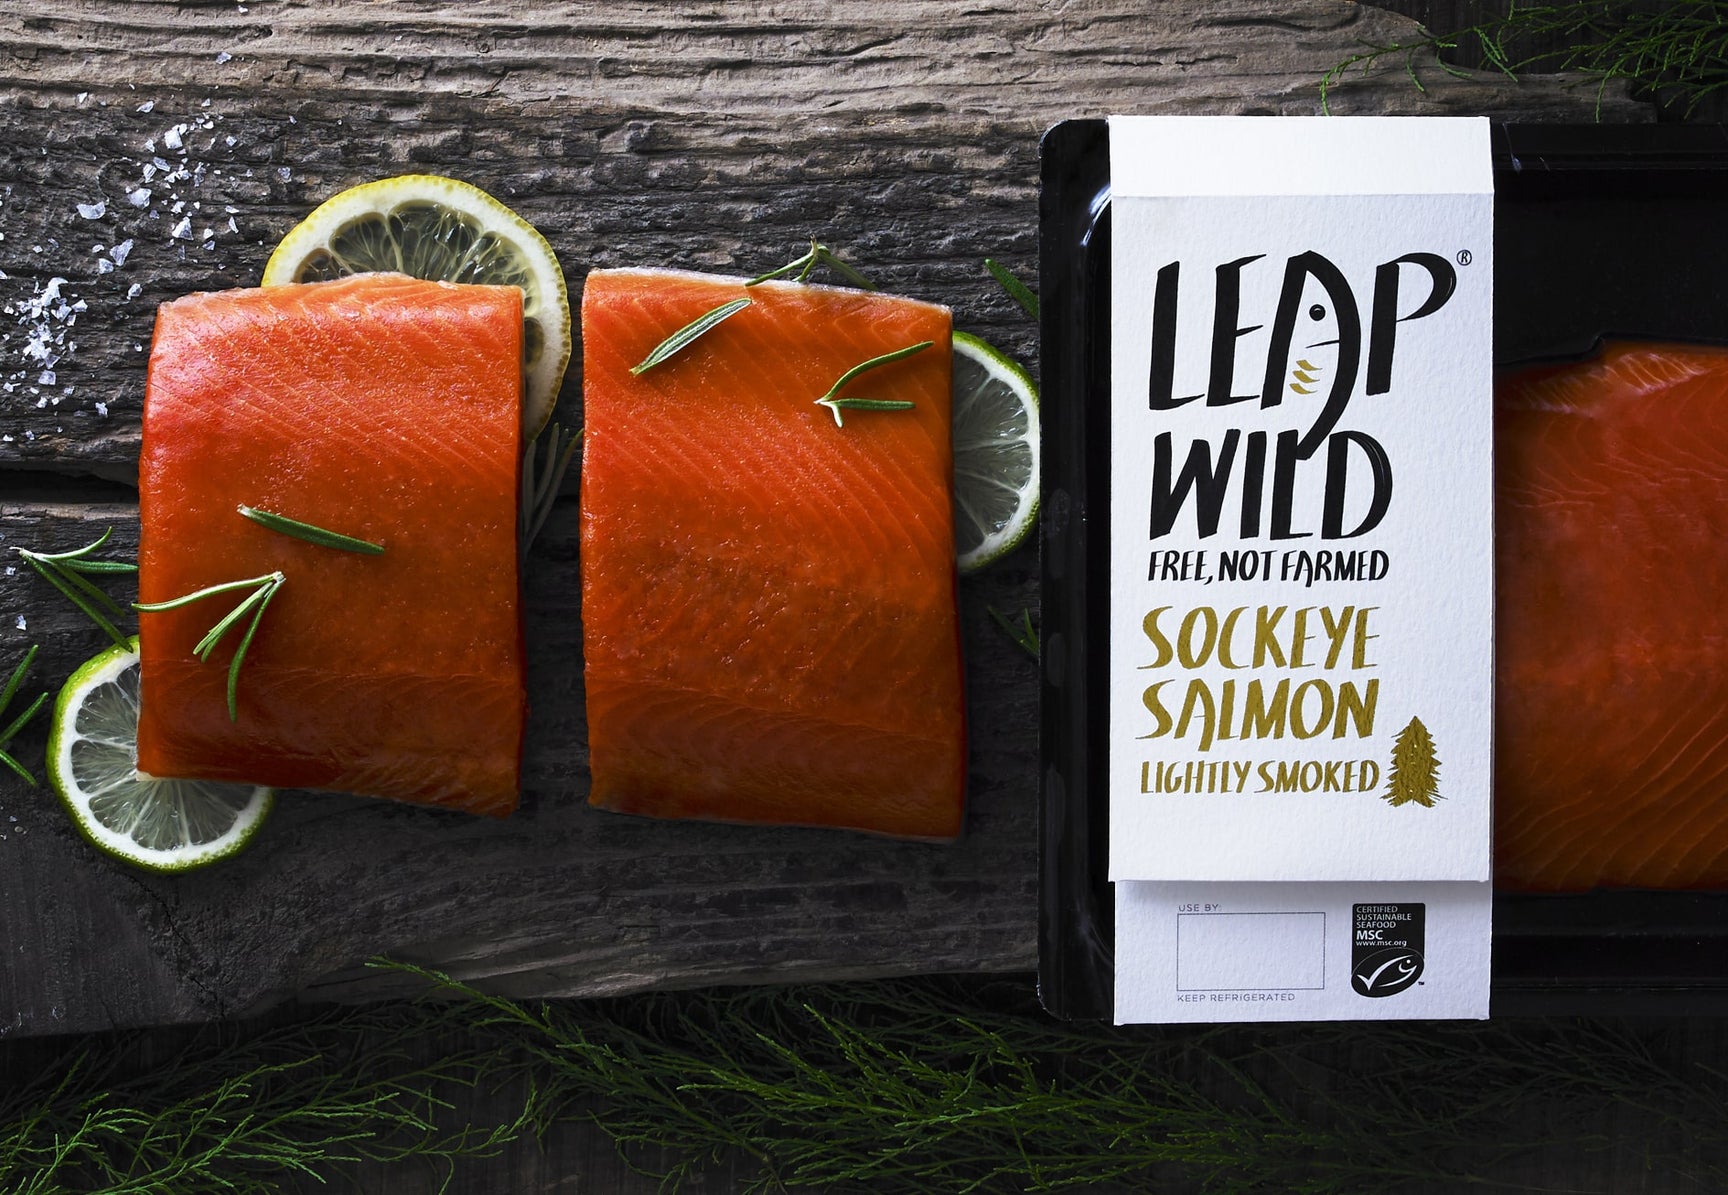 Leap - wild sockeye salmon 